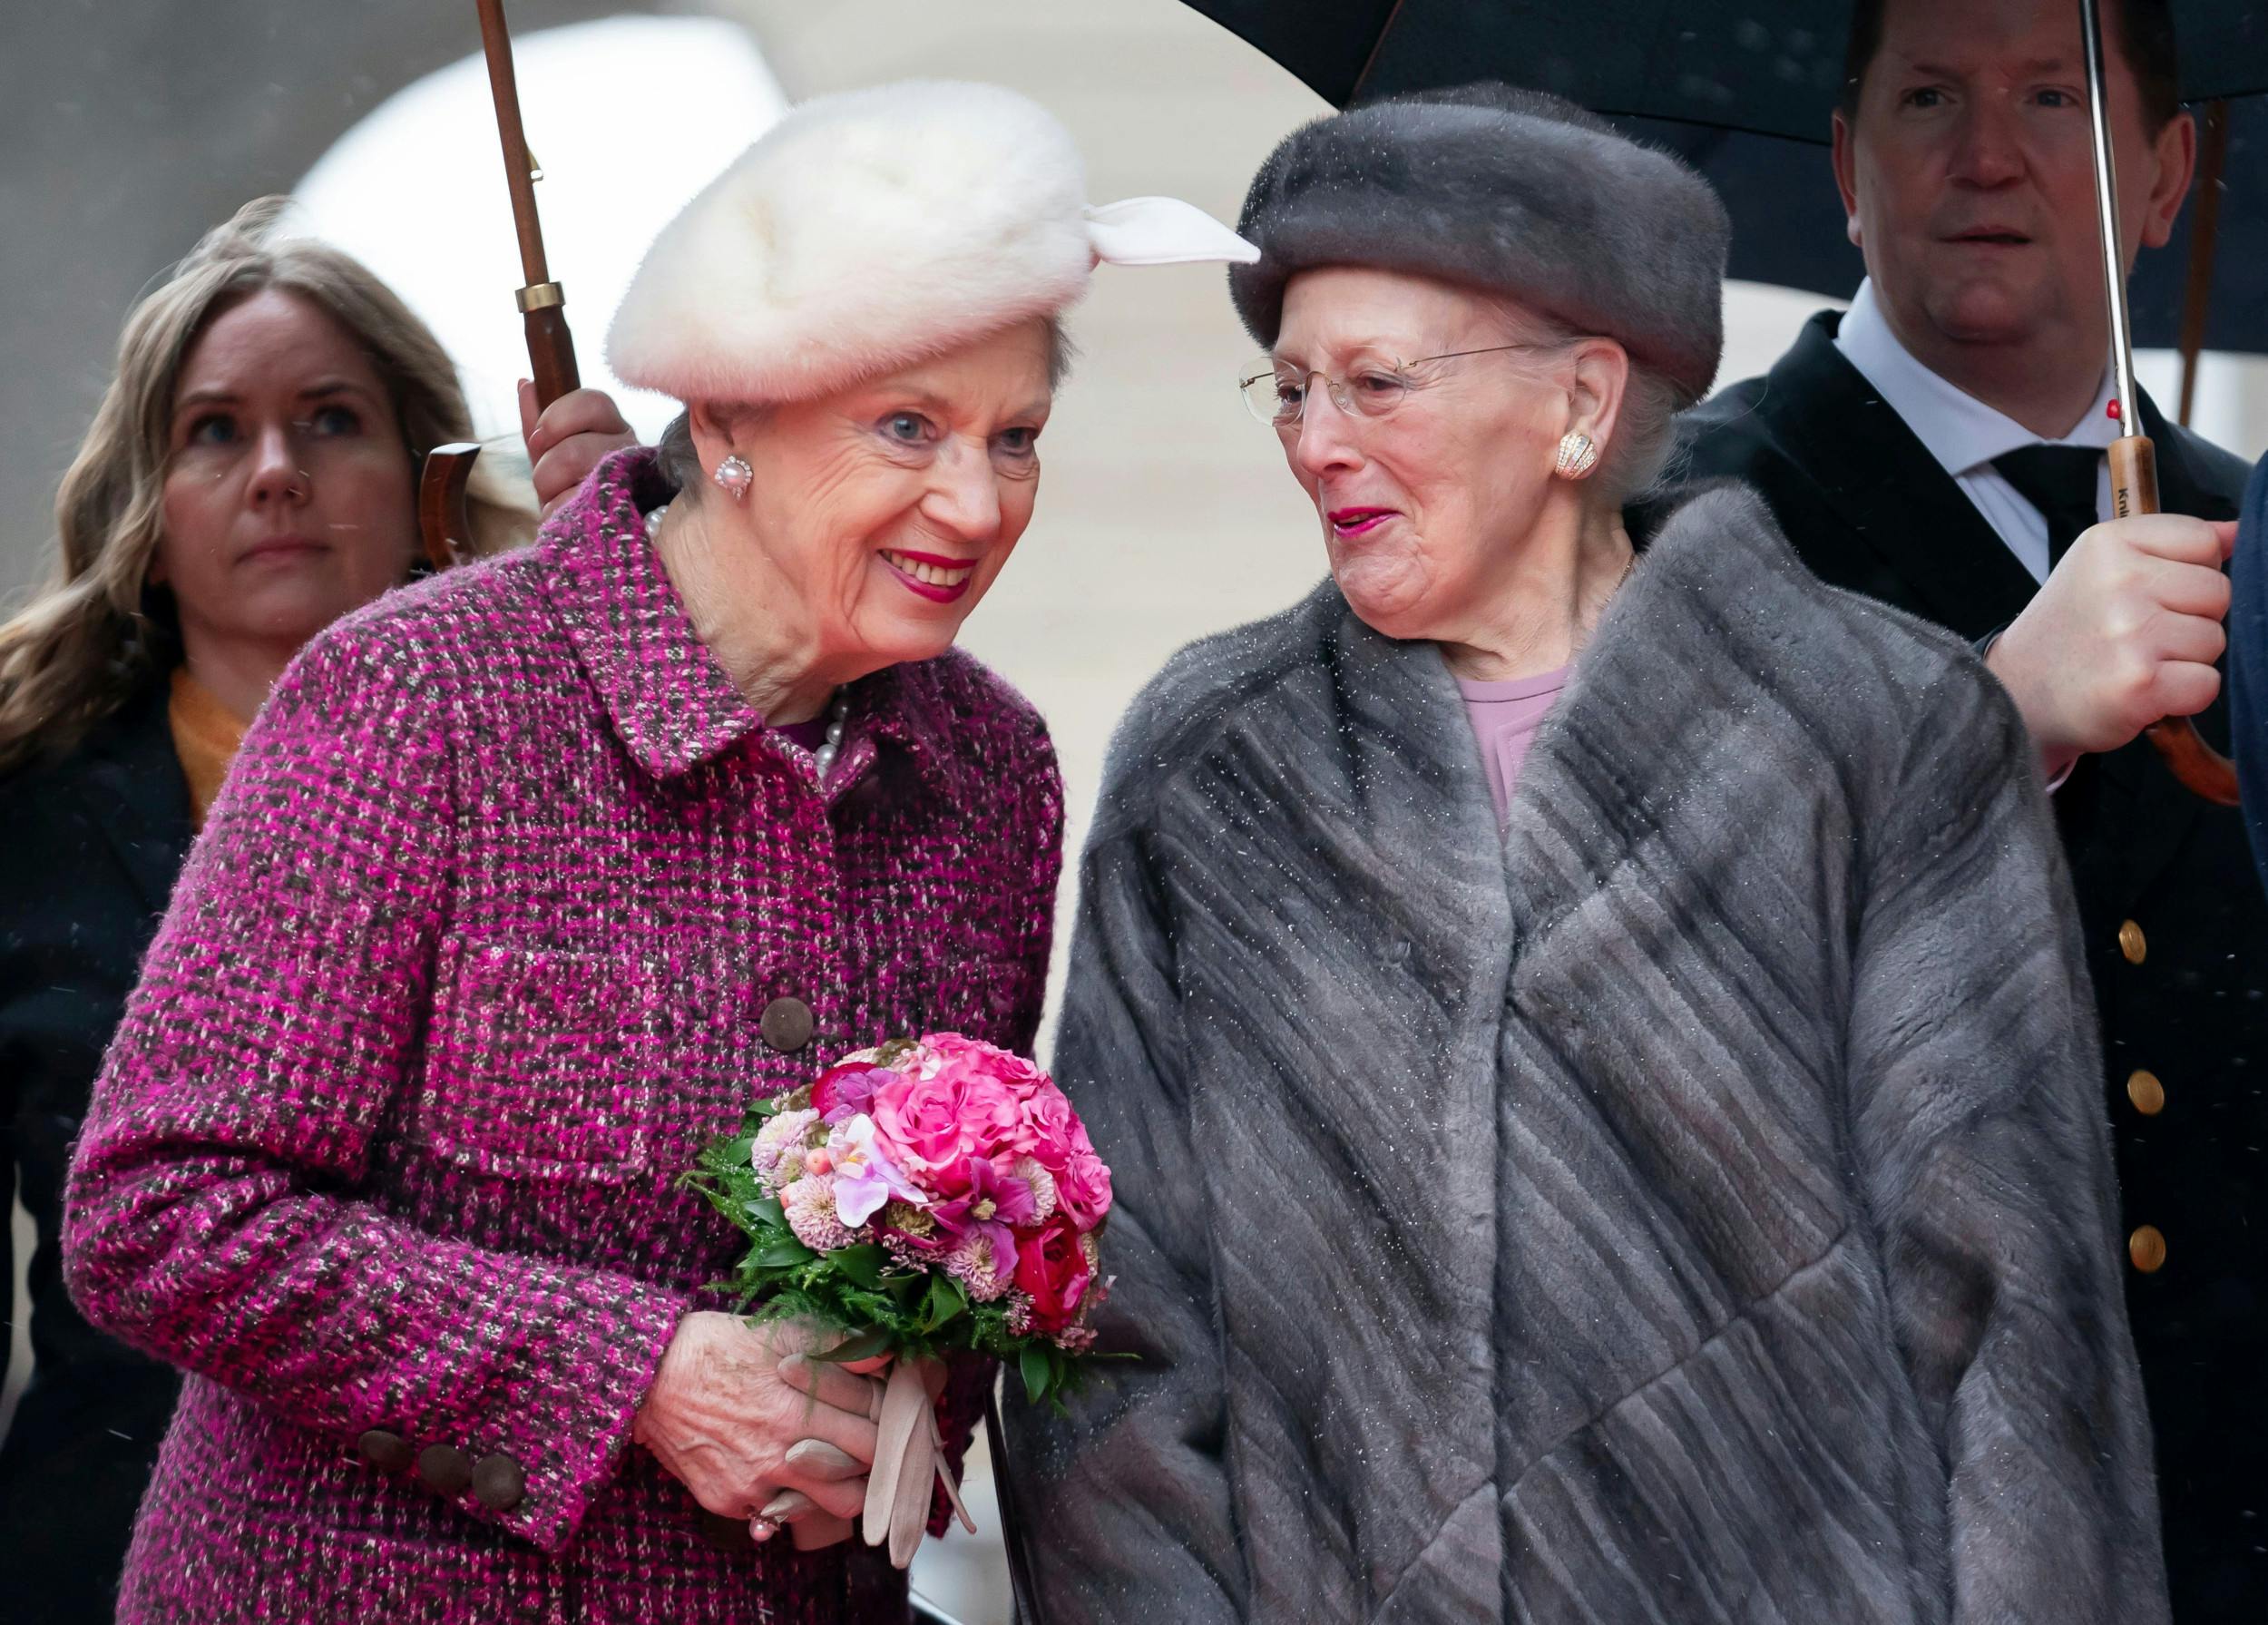 Efter hun har gjort sin søn til konge, ender dronning Margrethe, 84, med en månedsløn på en million skattefri kroner. Hendes lillesøster prinsesse Benedikte, 79, kommer i fremtiden til at få sine penge fra kong Frederik i stedet for sin storesøster.